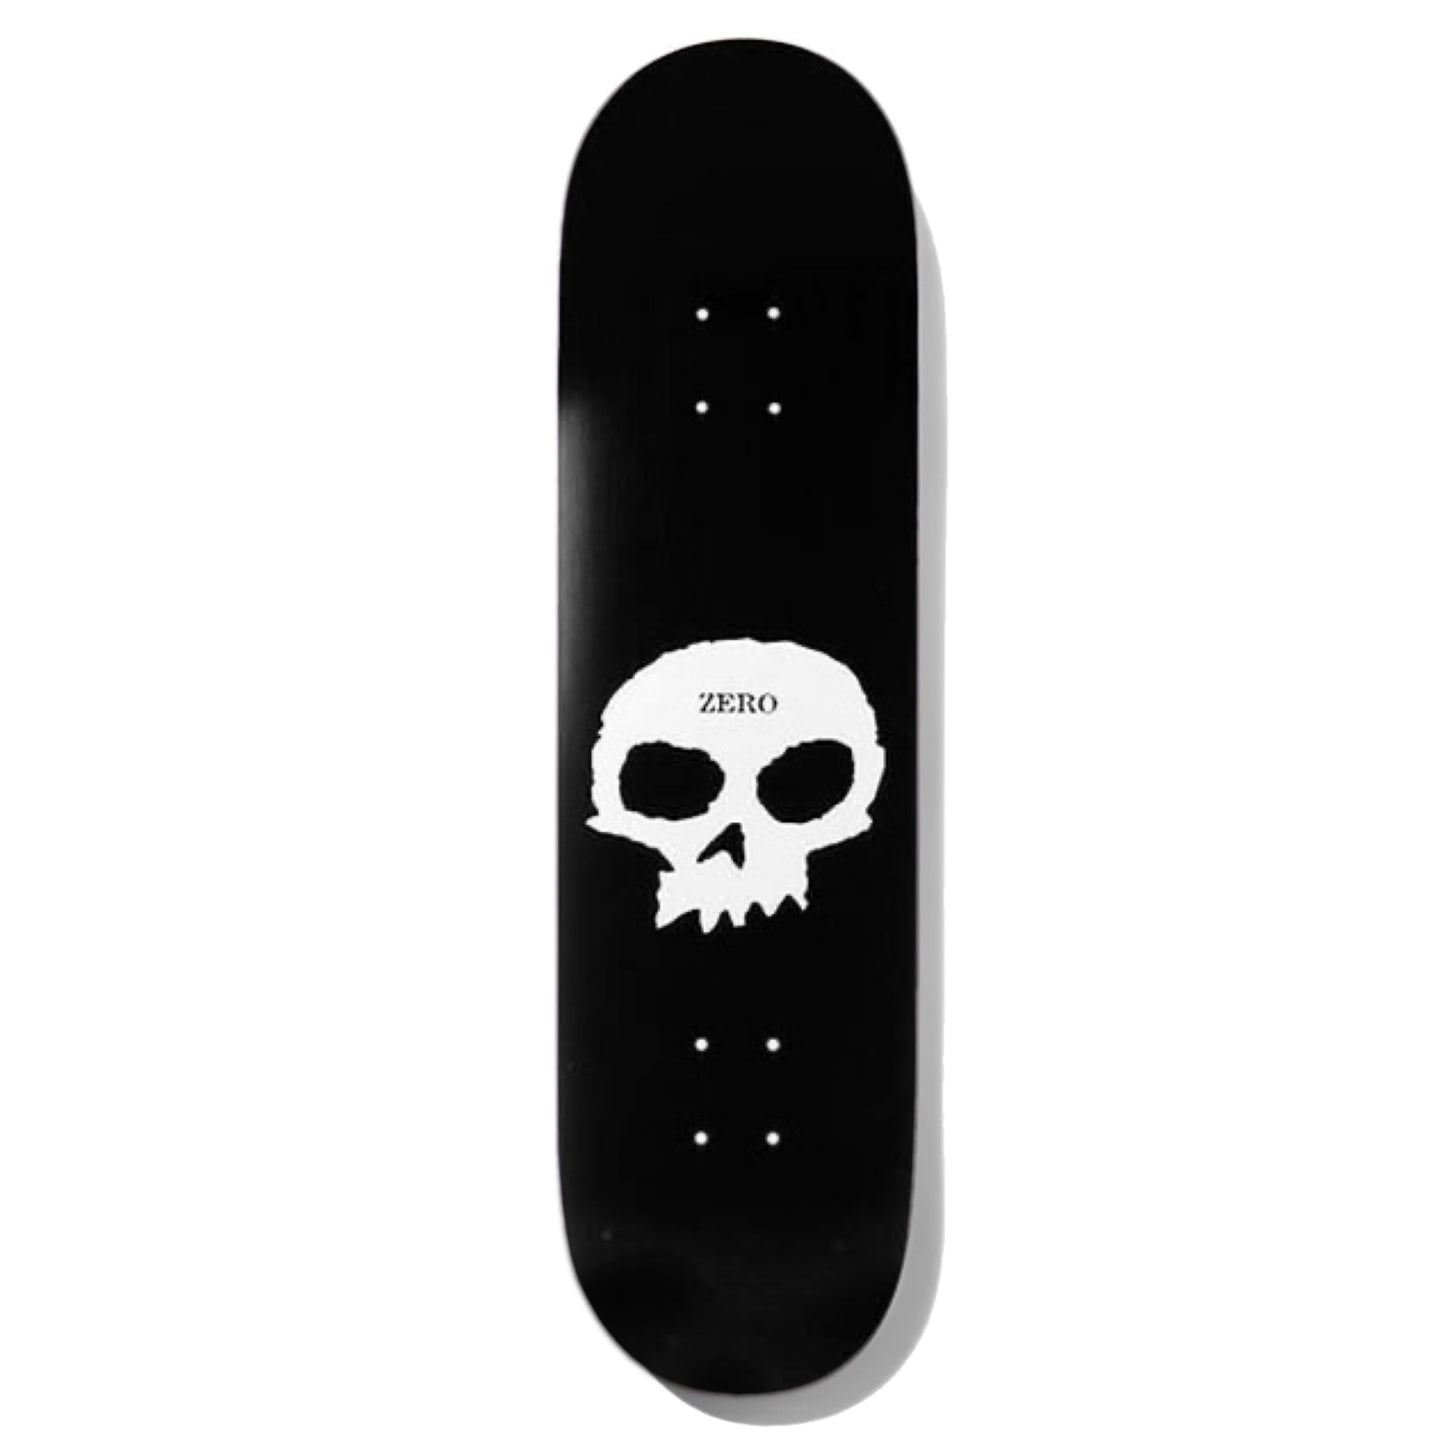 Zero Single Skull Skateboard Deck; Black background with illustrated graphic featuring white Zero skull logo in center